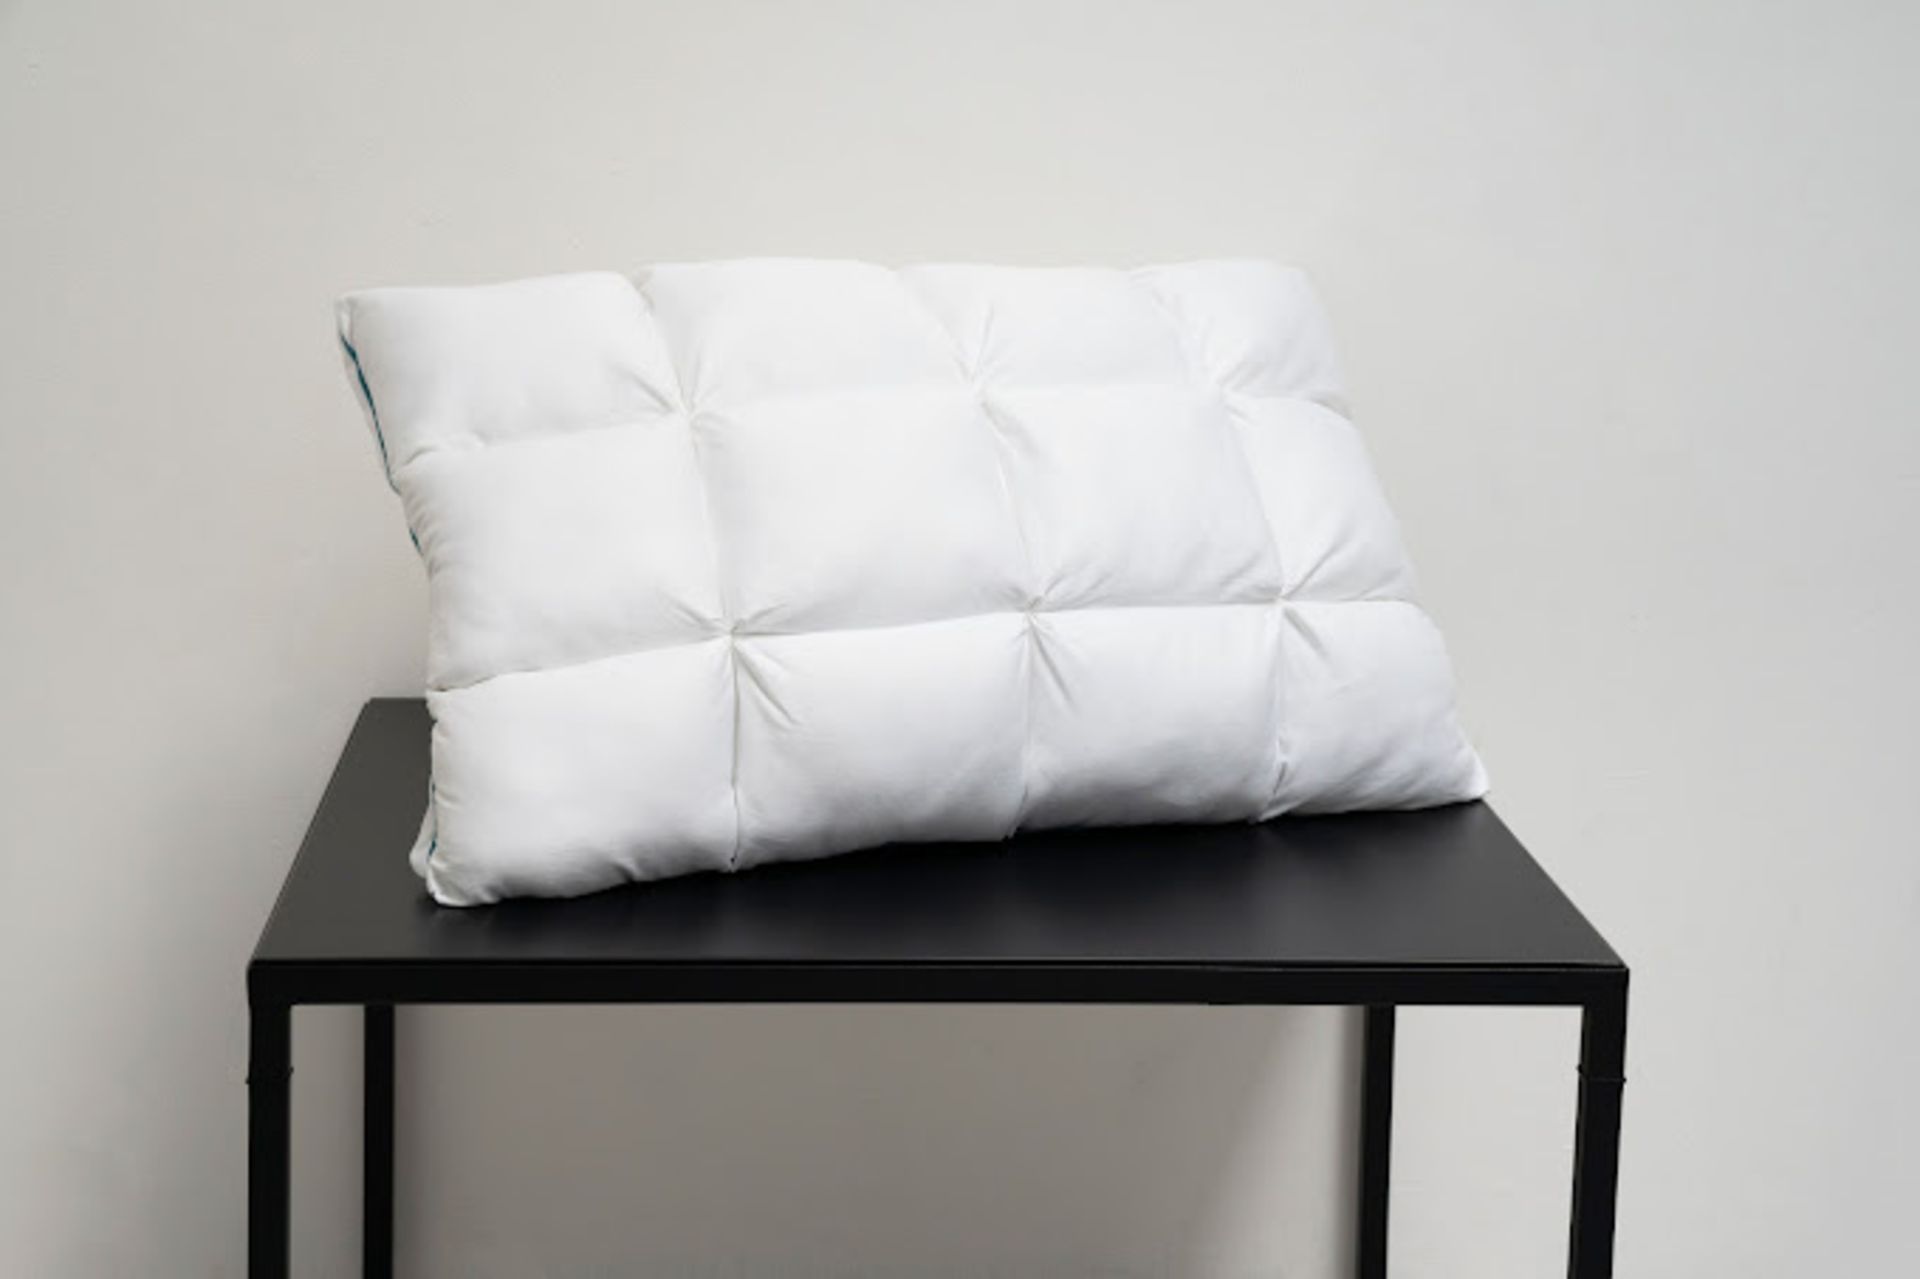 2 x ComfaSleep PL0001 Pillows - Image 7 of 20